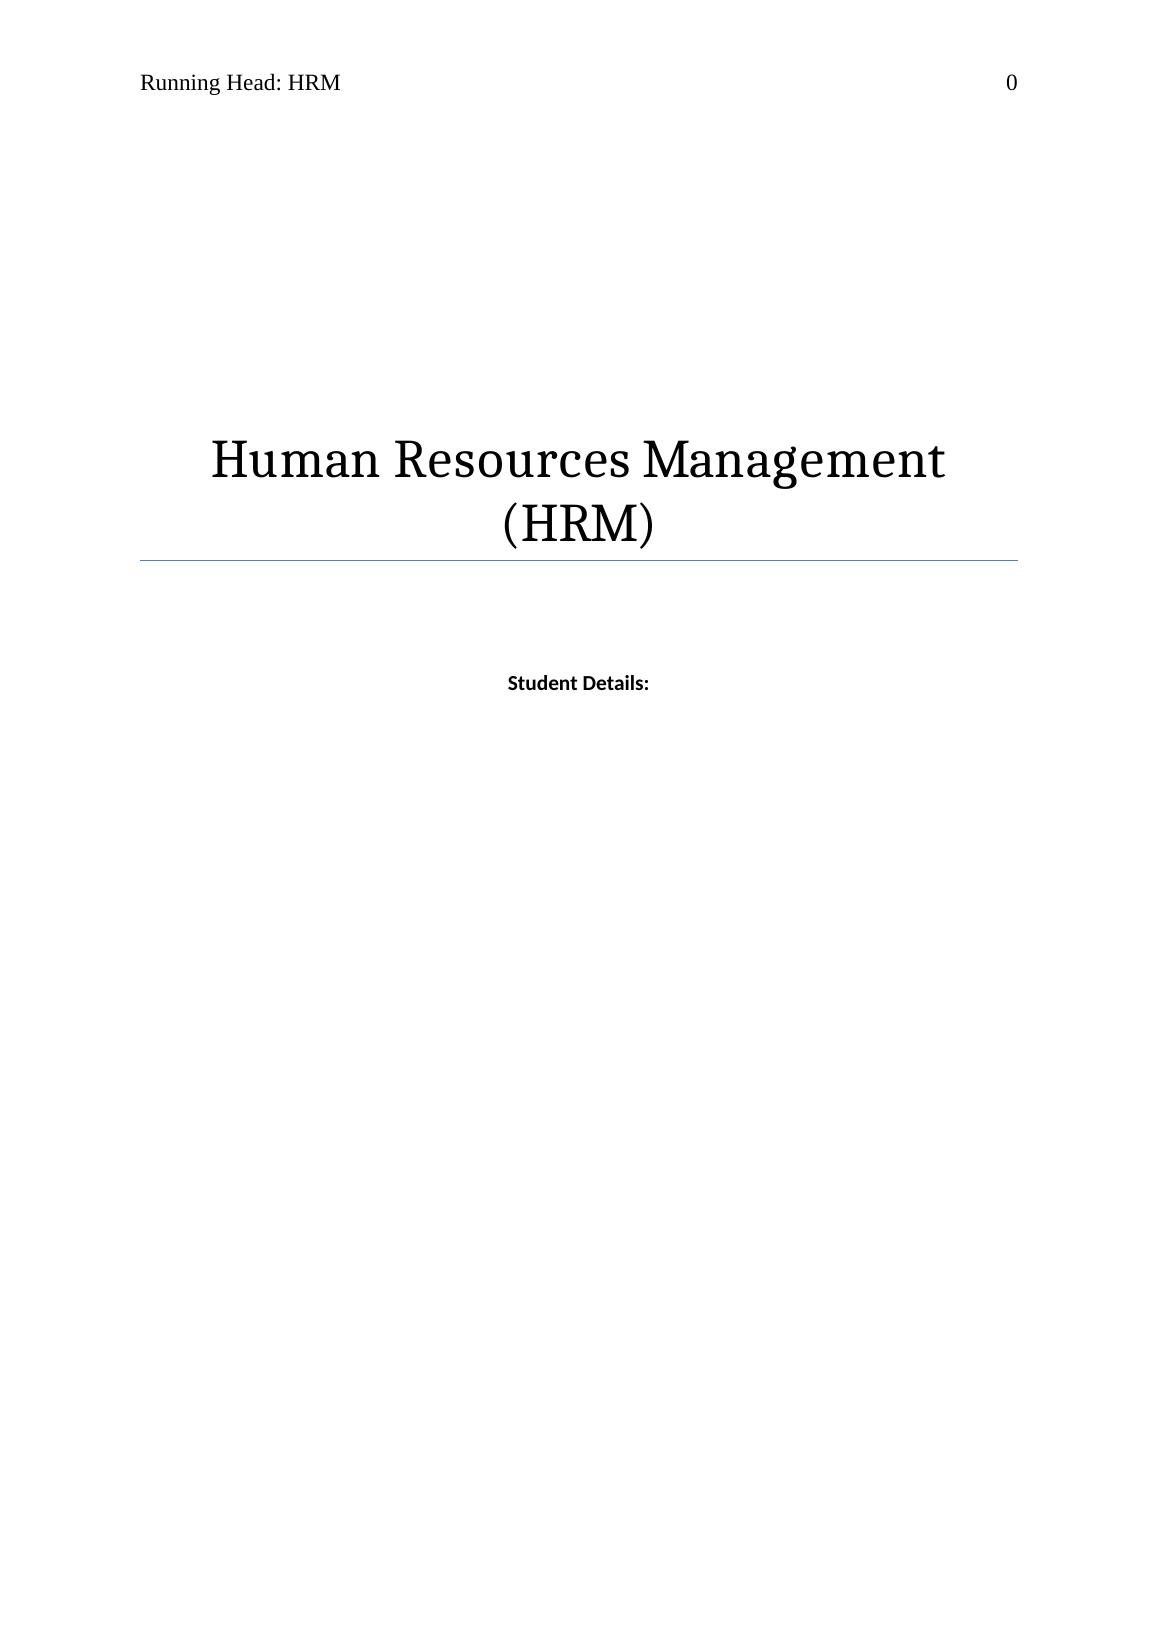 Human Resources Management (HRM) | Case Study Report_1